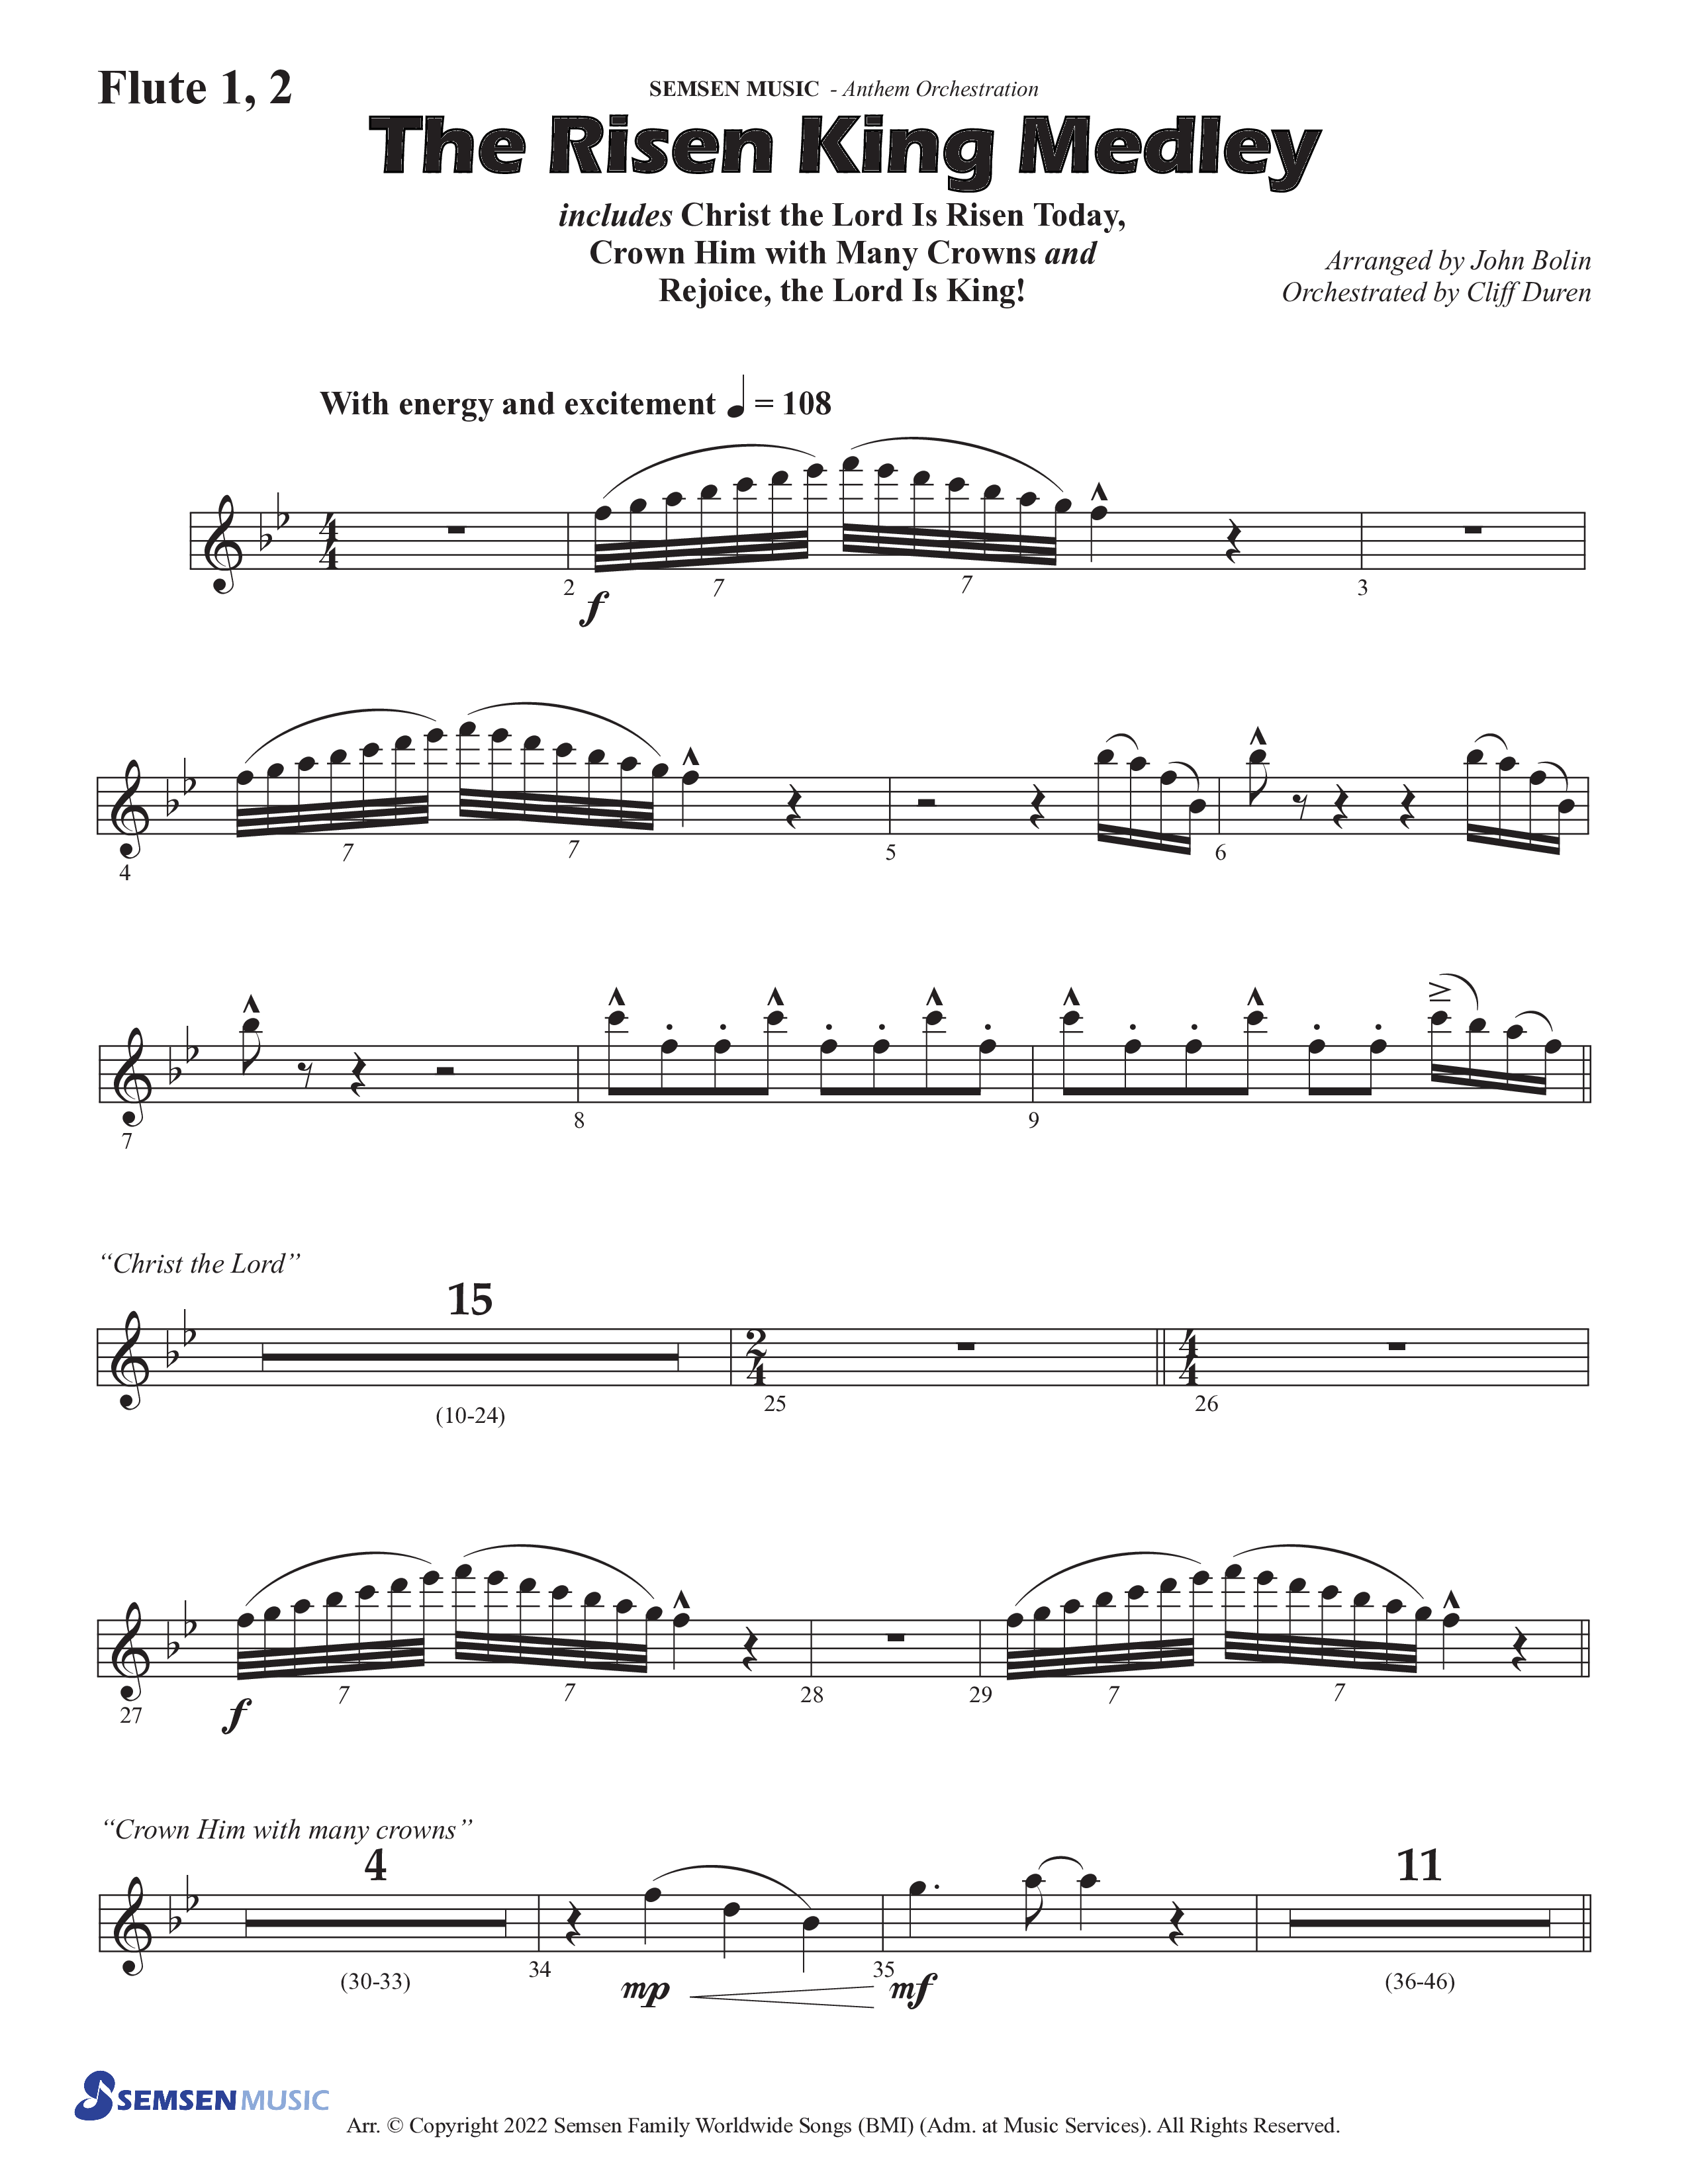 The Risen King Medley (Choral Anthem SATB) Flute 1/2 (Semsen Music / Arr. John Bolin / Orch. Cliff Duren)